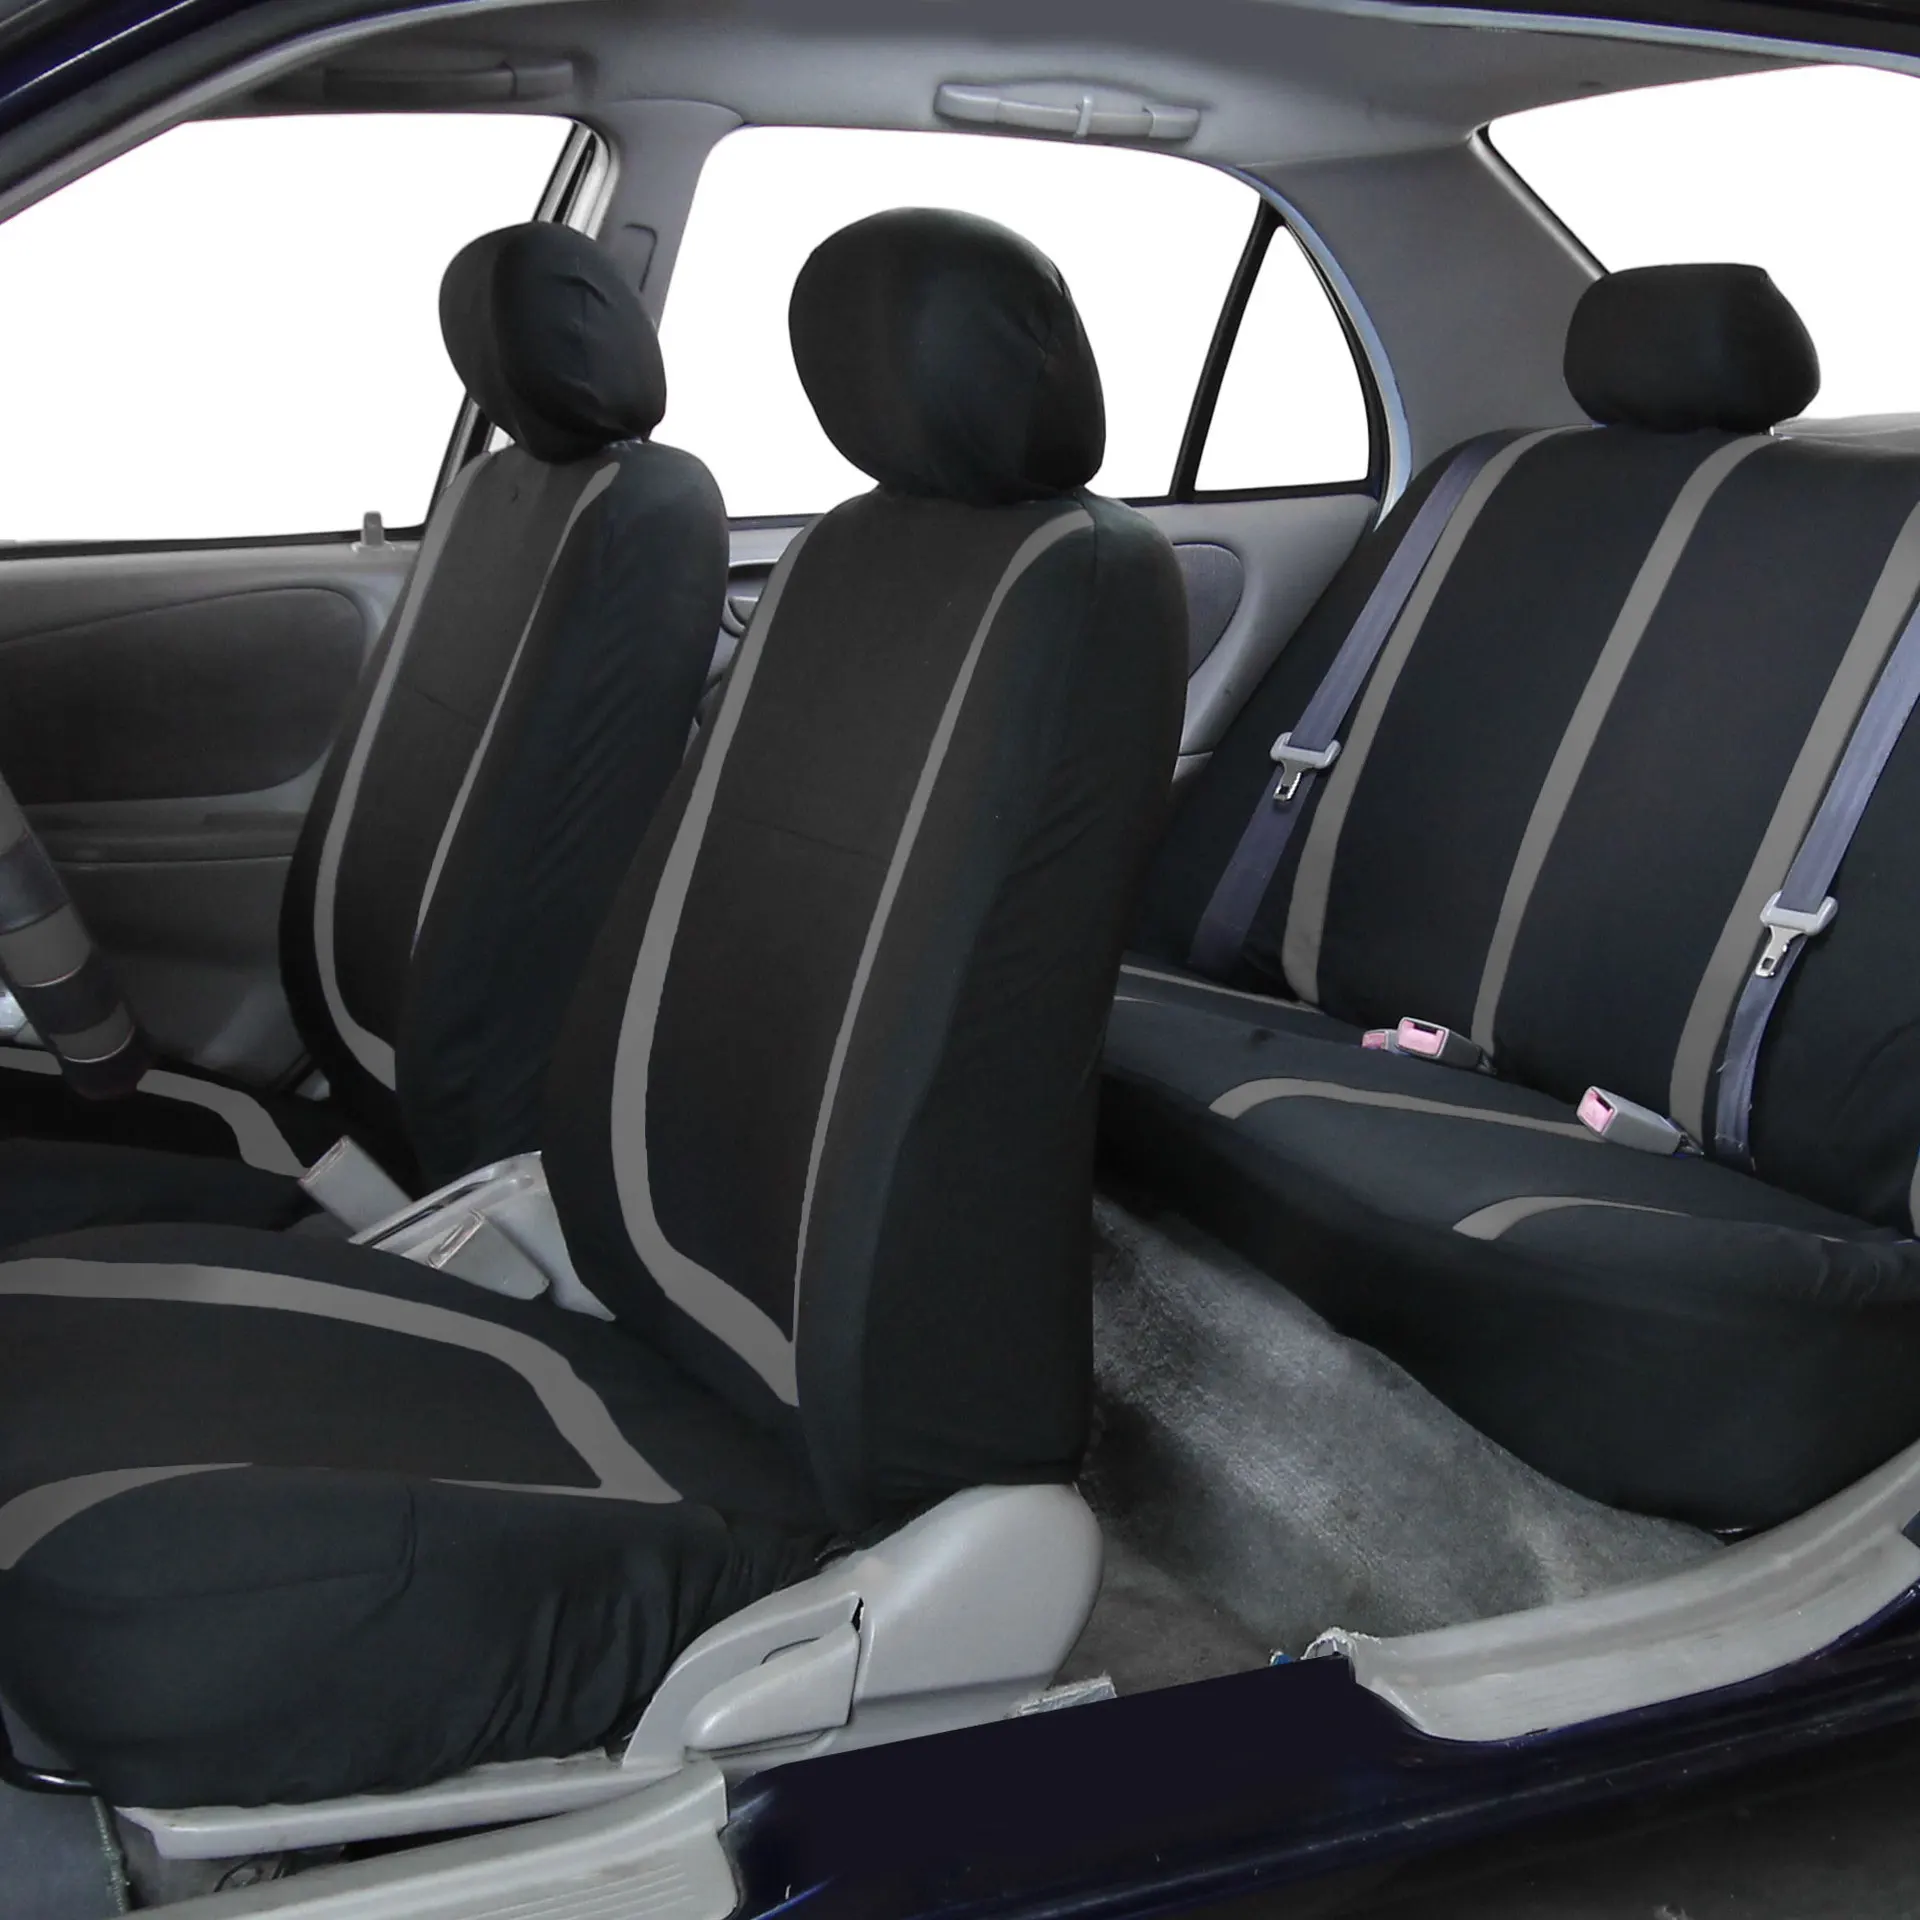 

2022 Fabric Car Seat Covers For Volkswagen Golf Amarok Canyon Aventura Atlas Beetle Jetta Bora Polo CC Auto Seat Cushion Cover